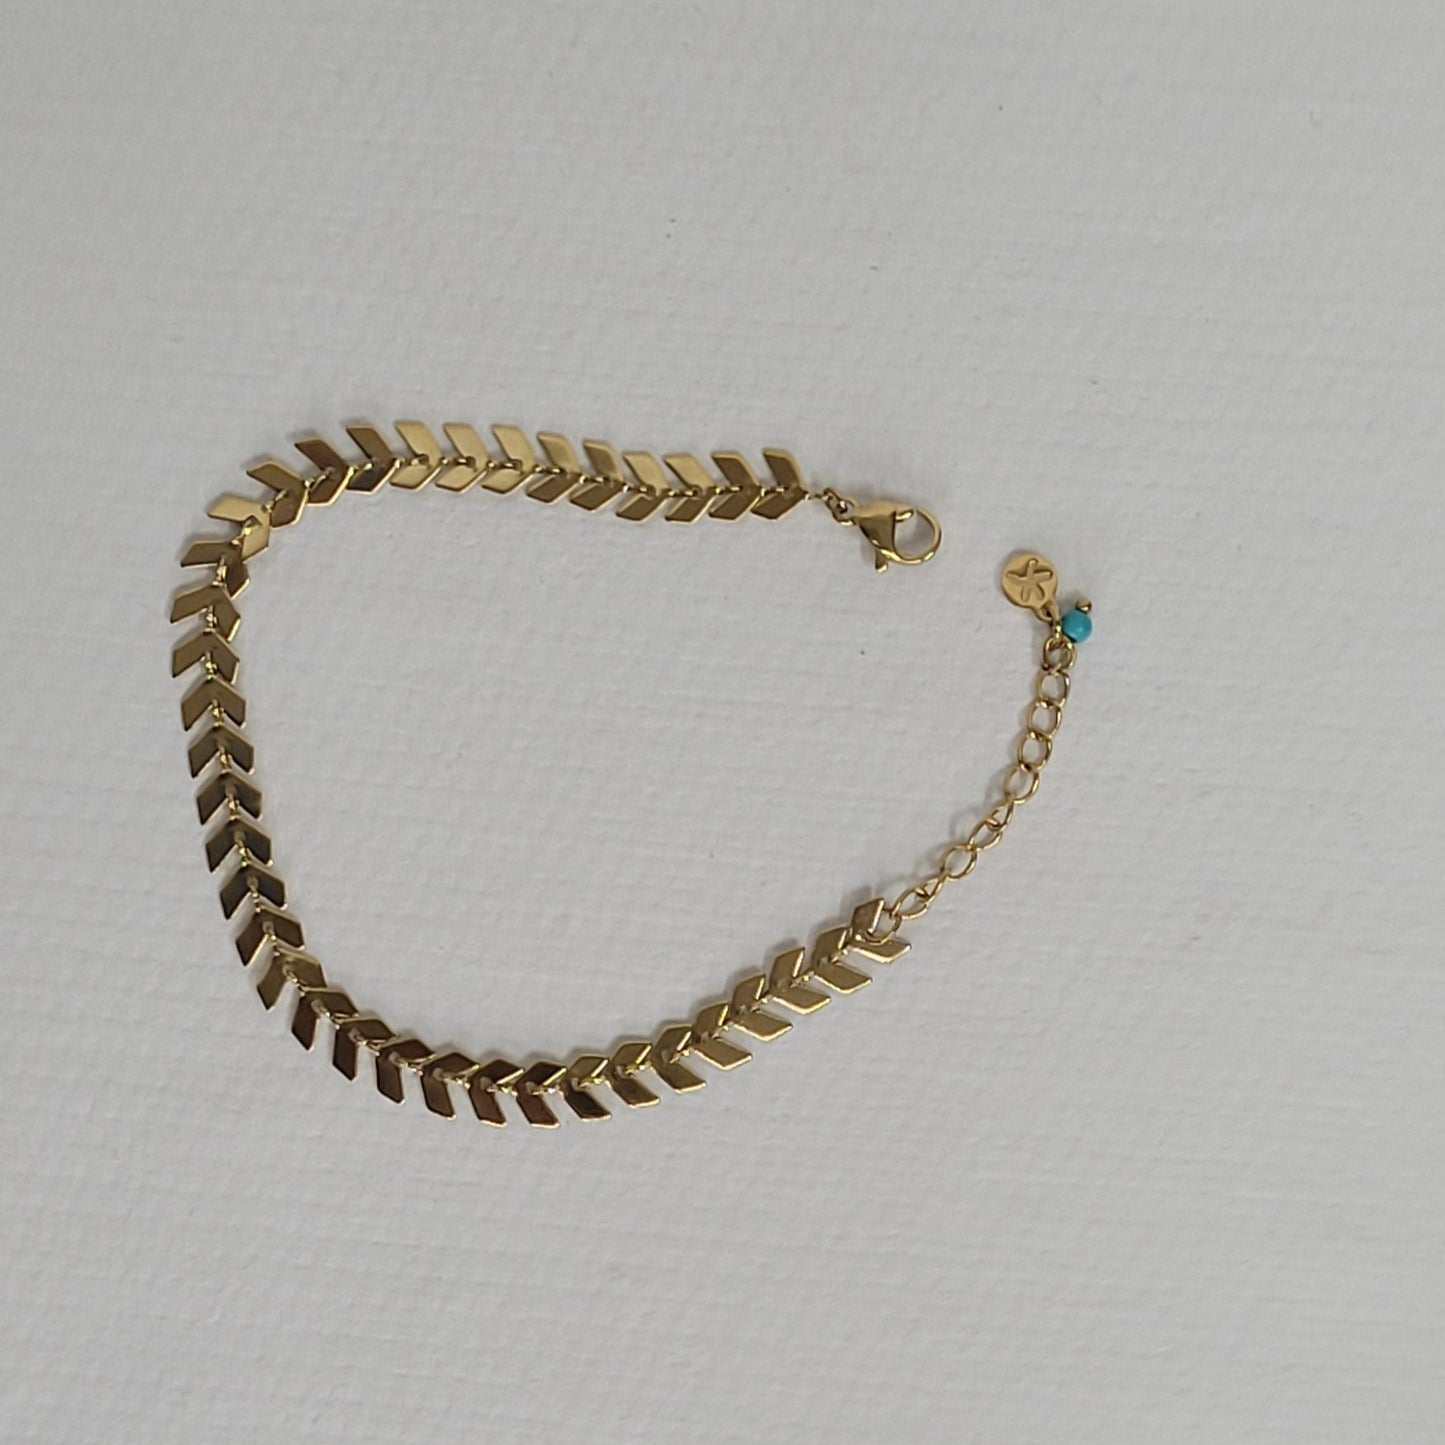 Gold Chevron Bracelet by Starfish Project